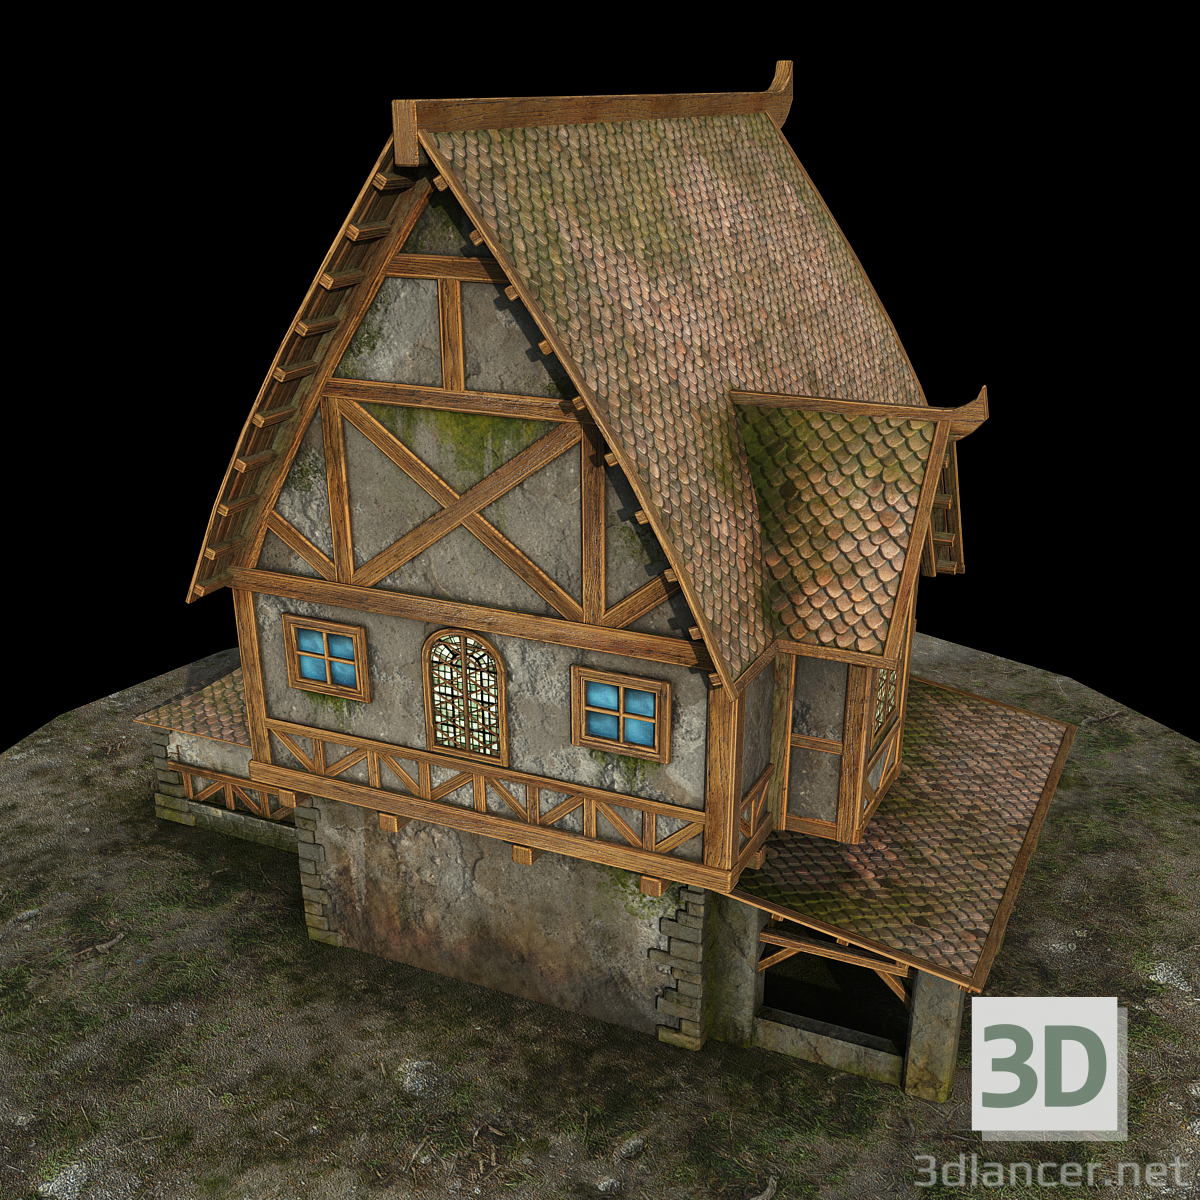 Landhaus 3D-Modell kaufen - Rendern